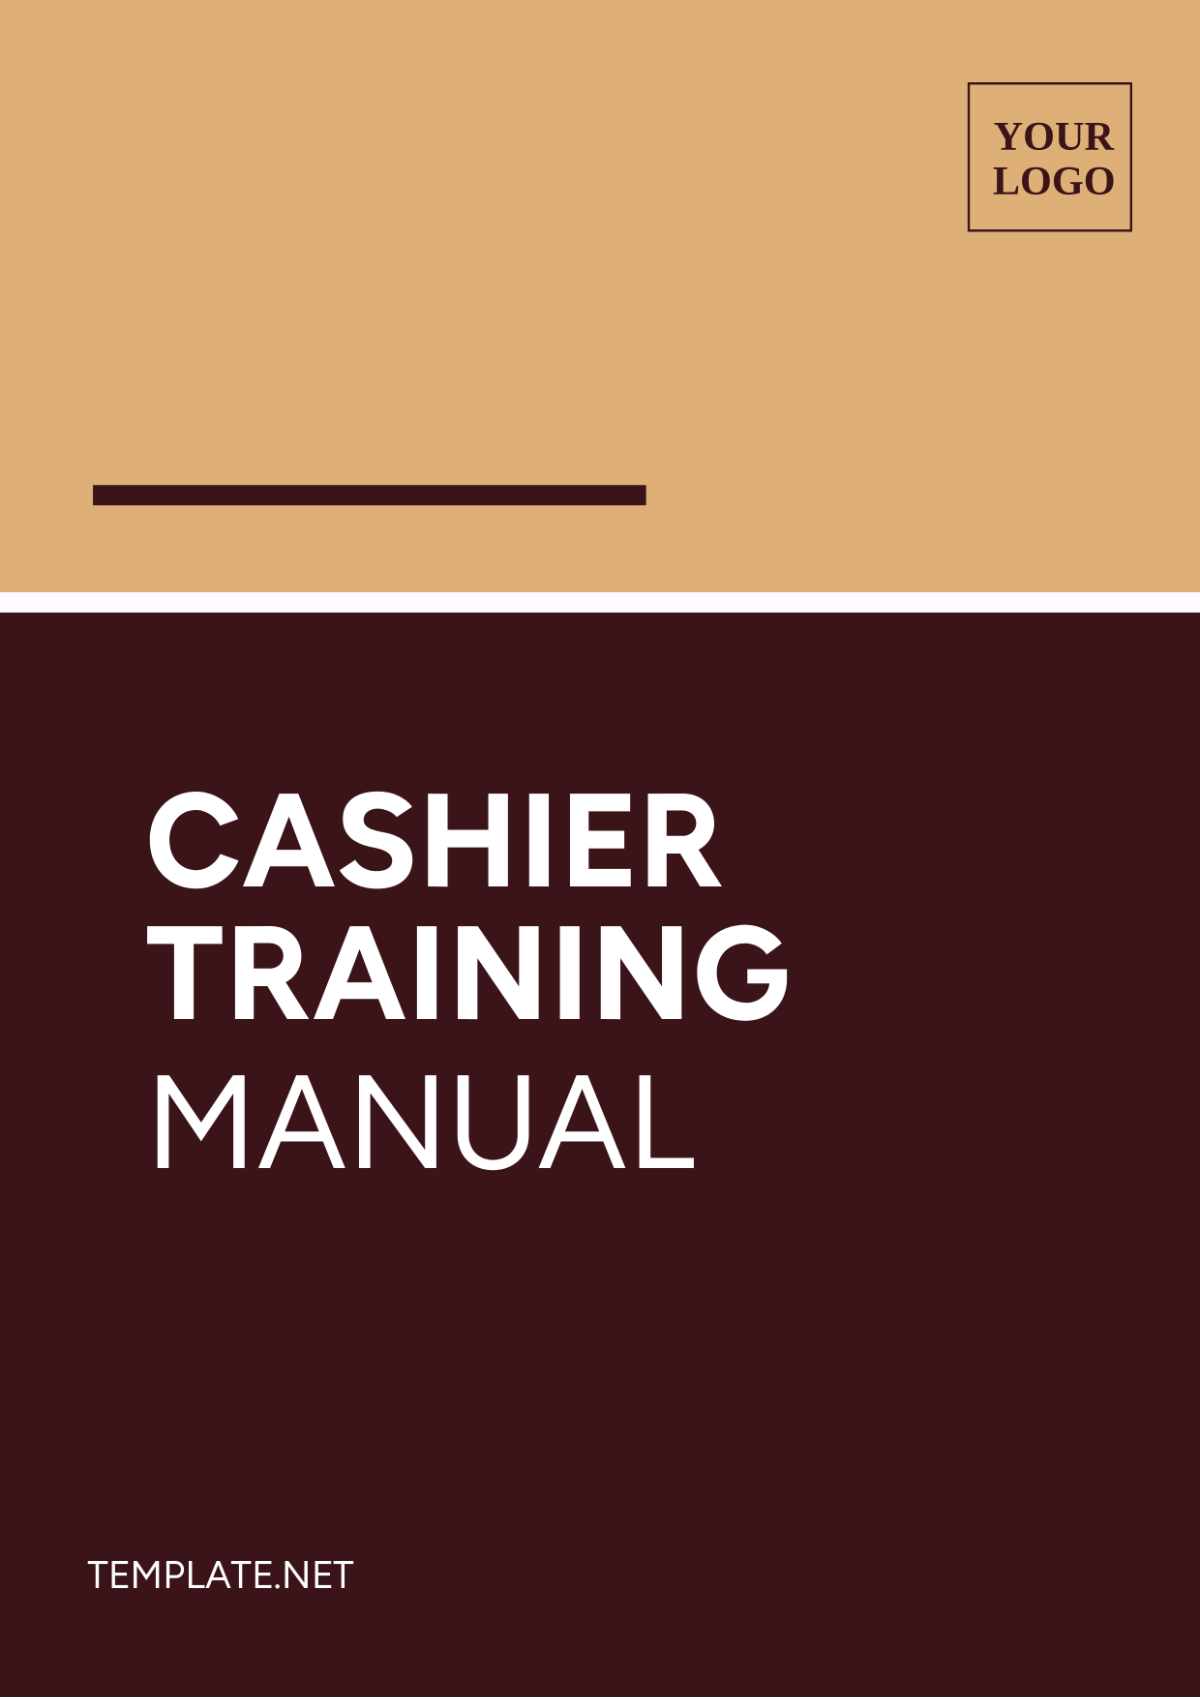 Free Cashier Training Manual Template